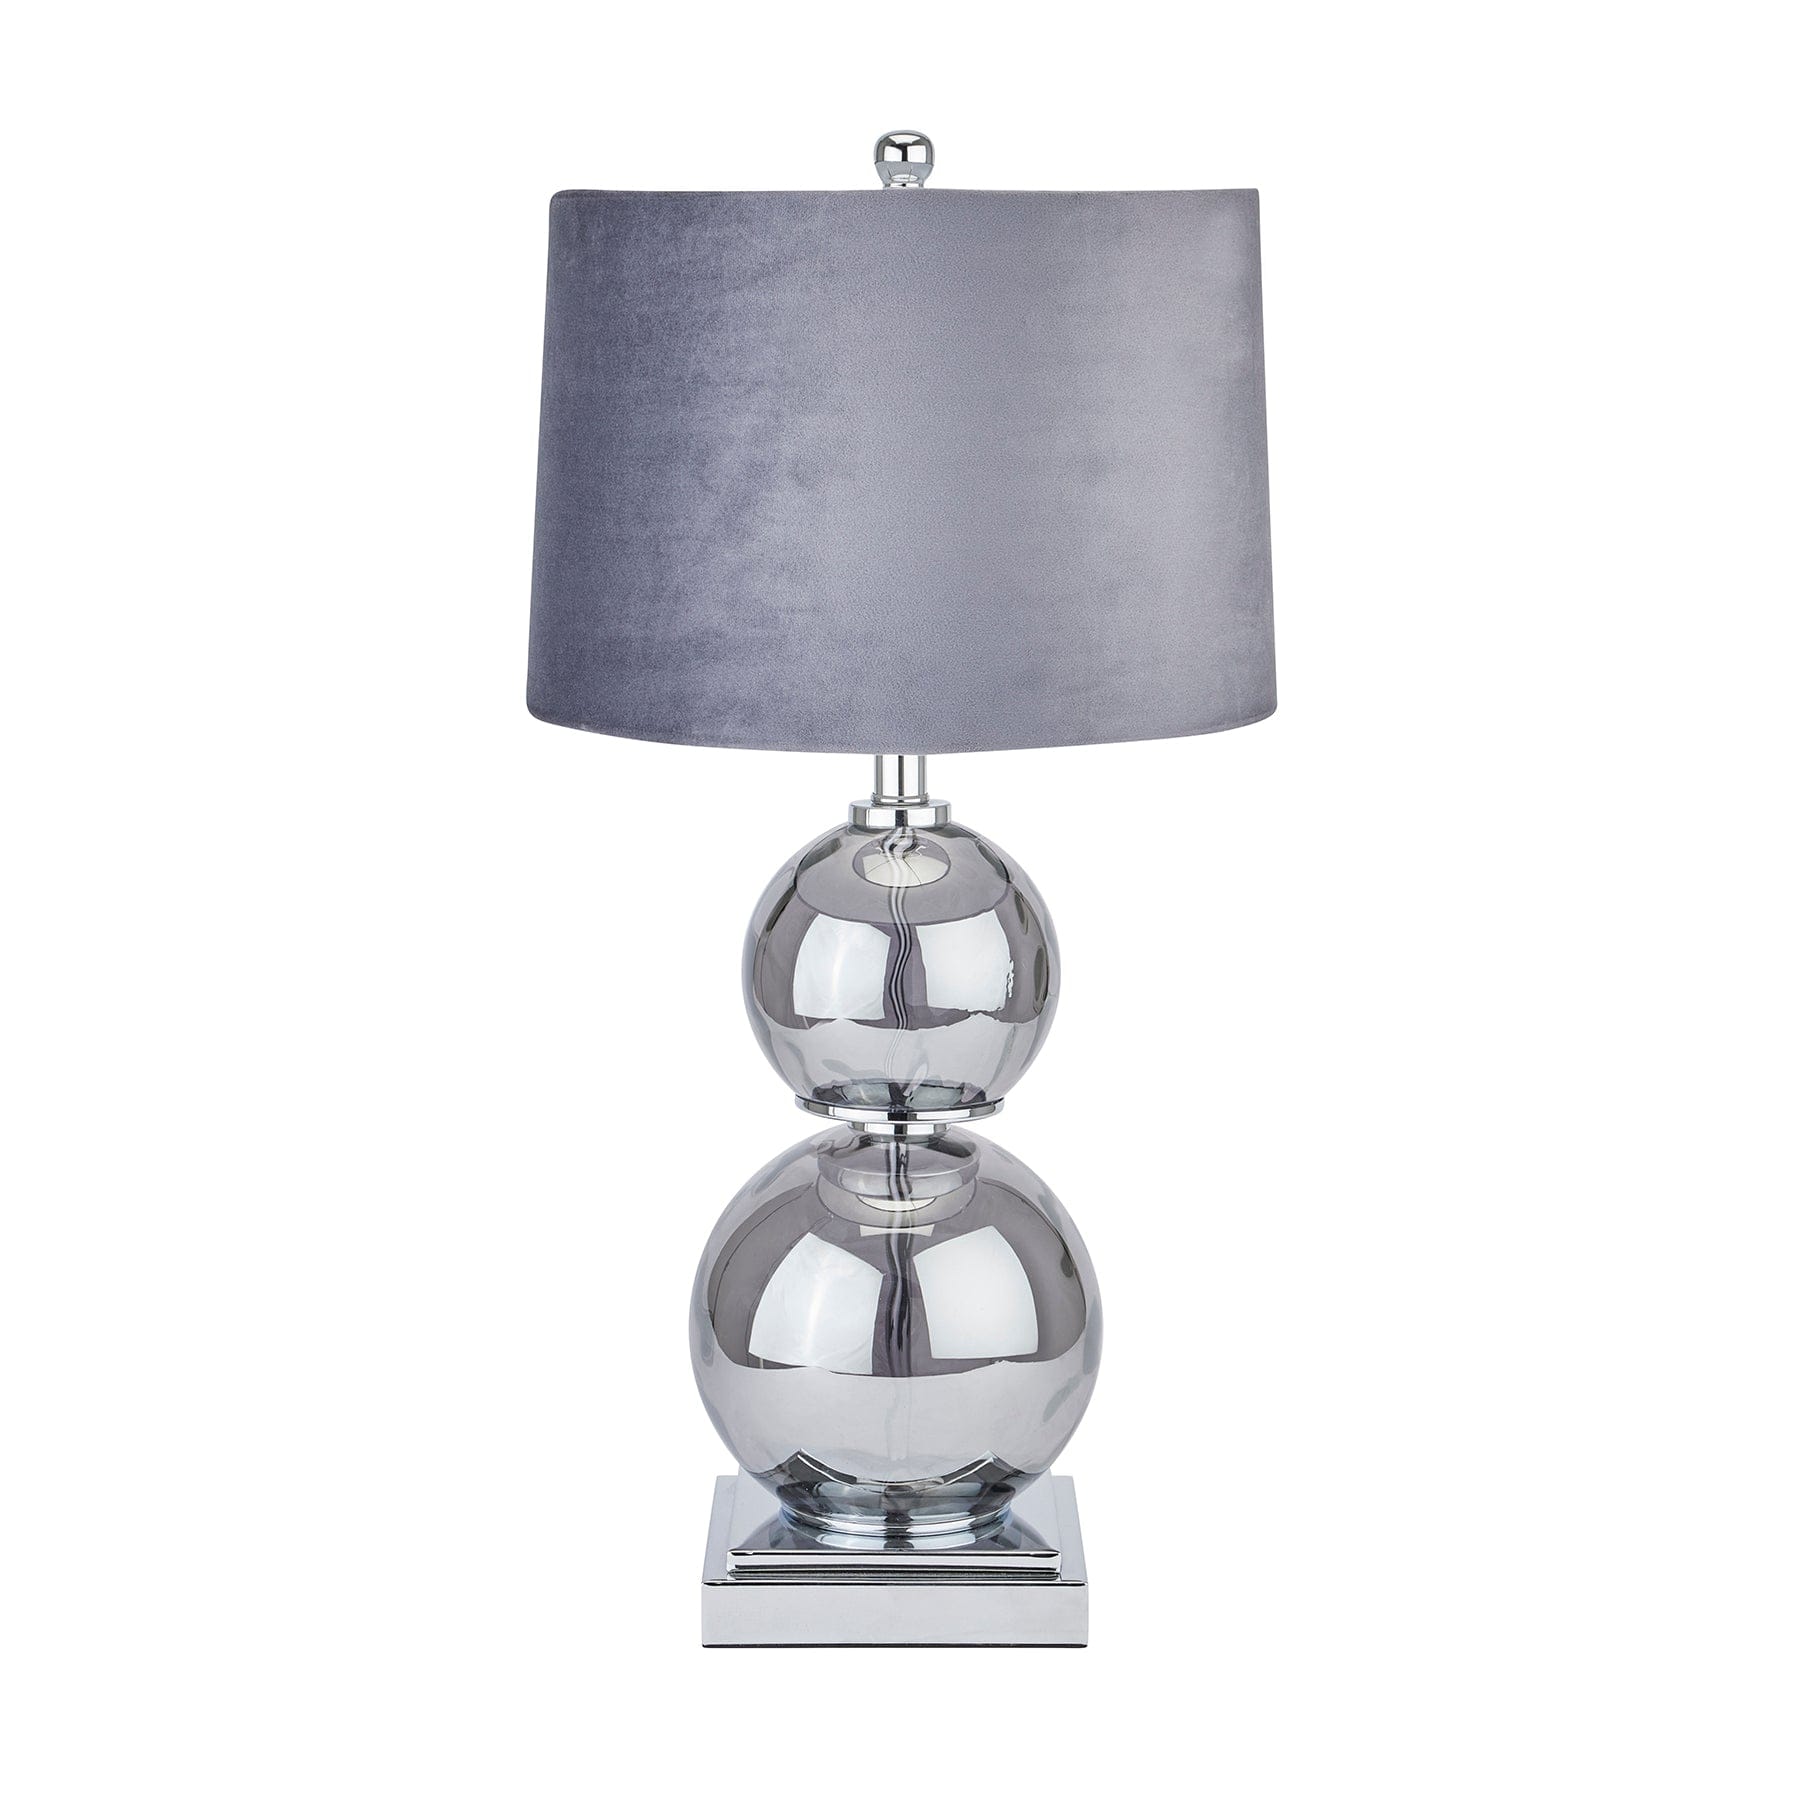 Hill Interiors Table lamp Shamrock Metallic Glass Lamp With Velvet Shade